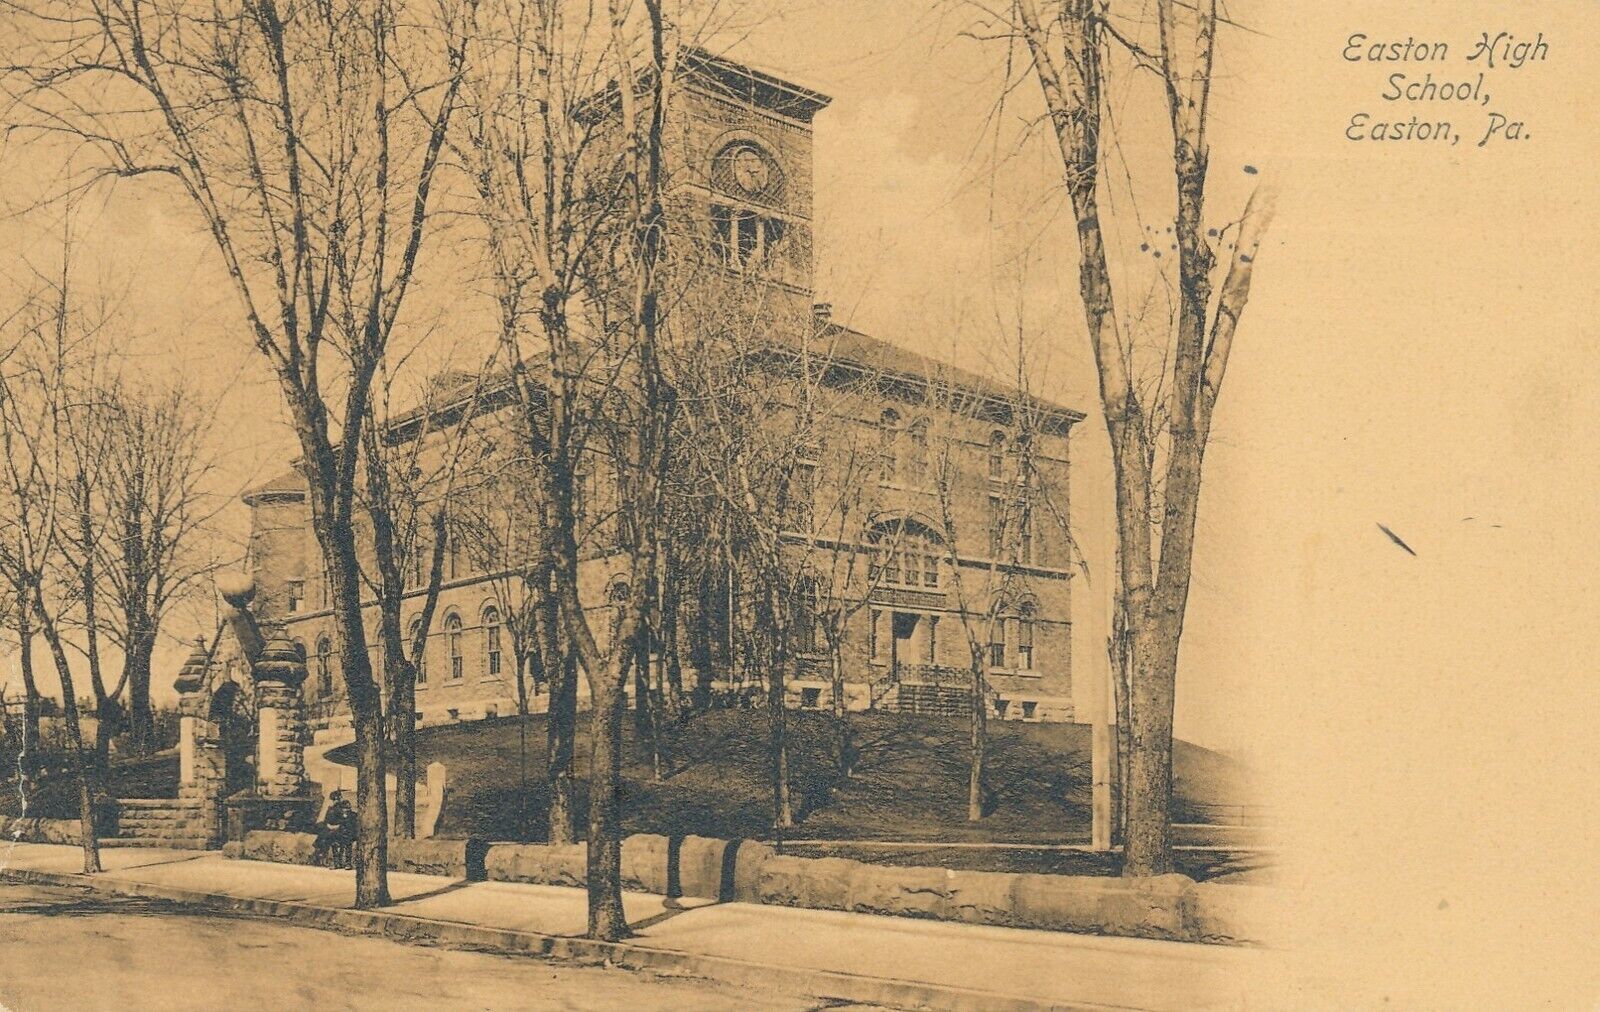 EASTON PA – Easton High School – udb – mailed 1909